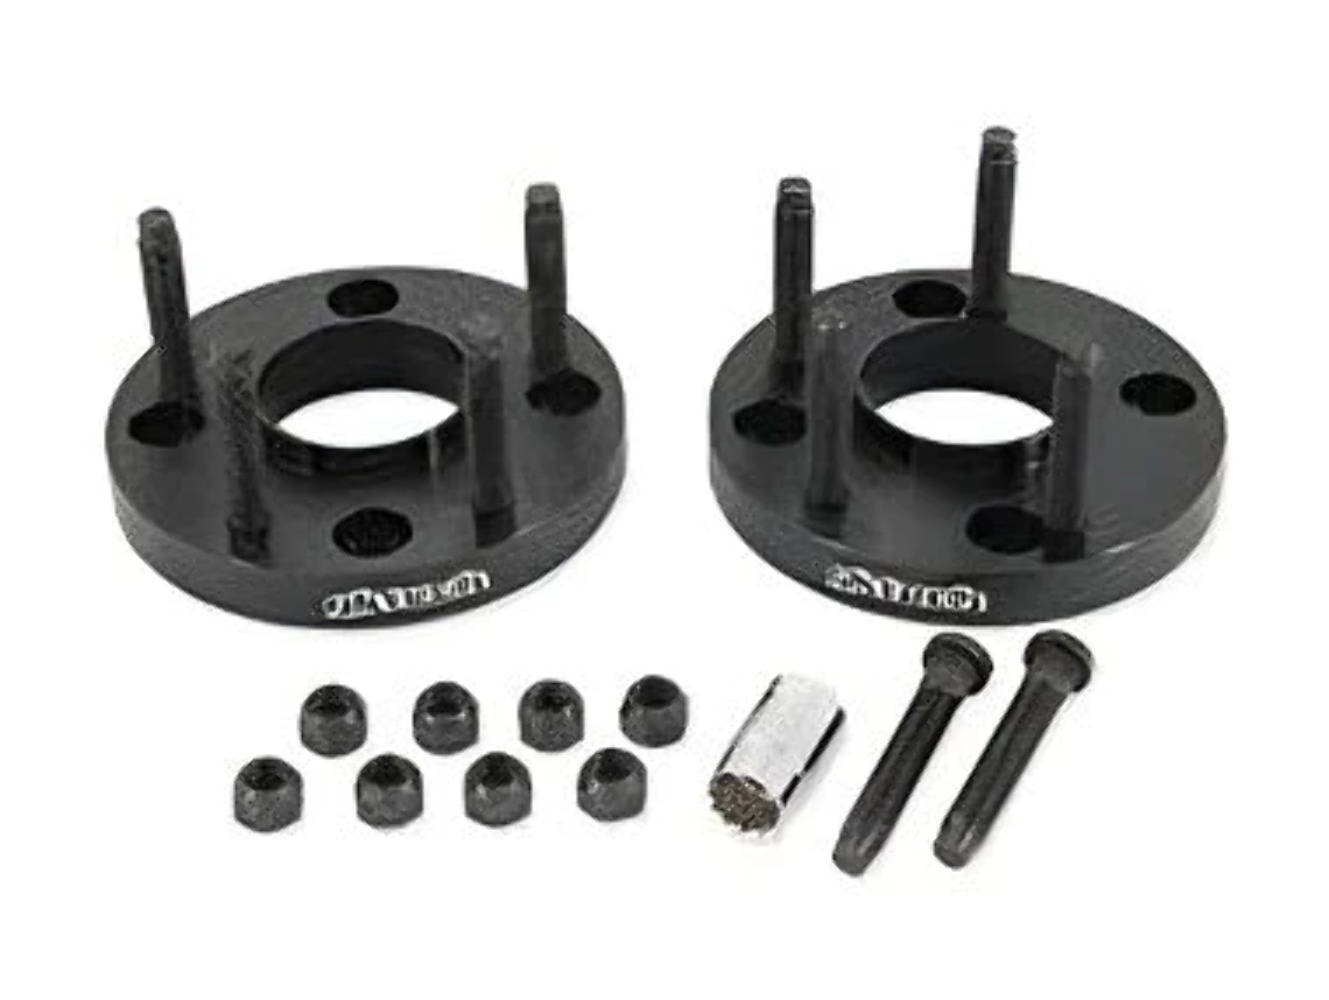 GKTCH 4 to 5 lug wheel adaptors (PAIR)